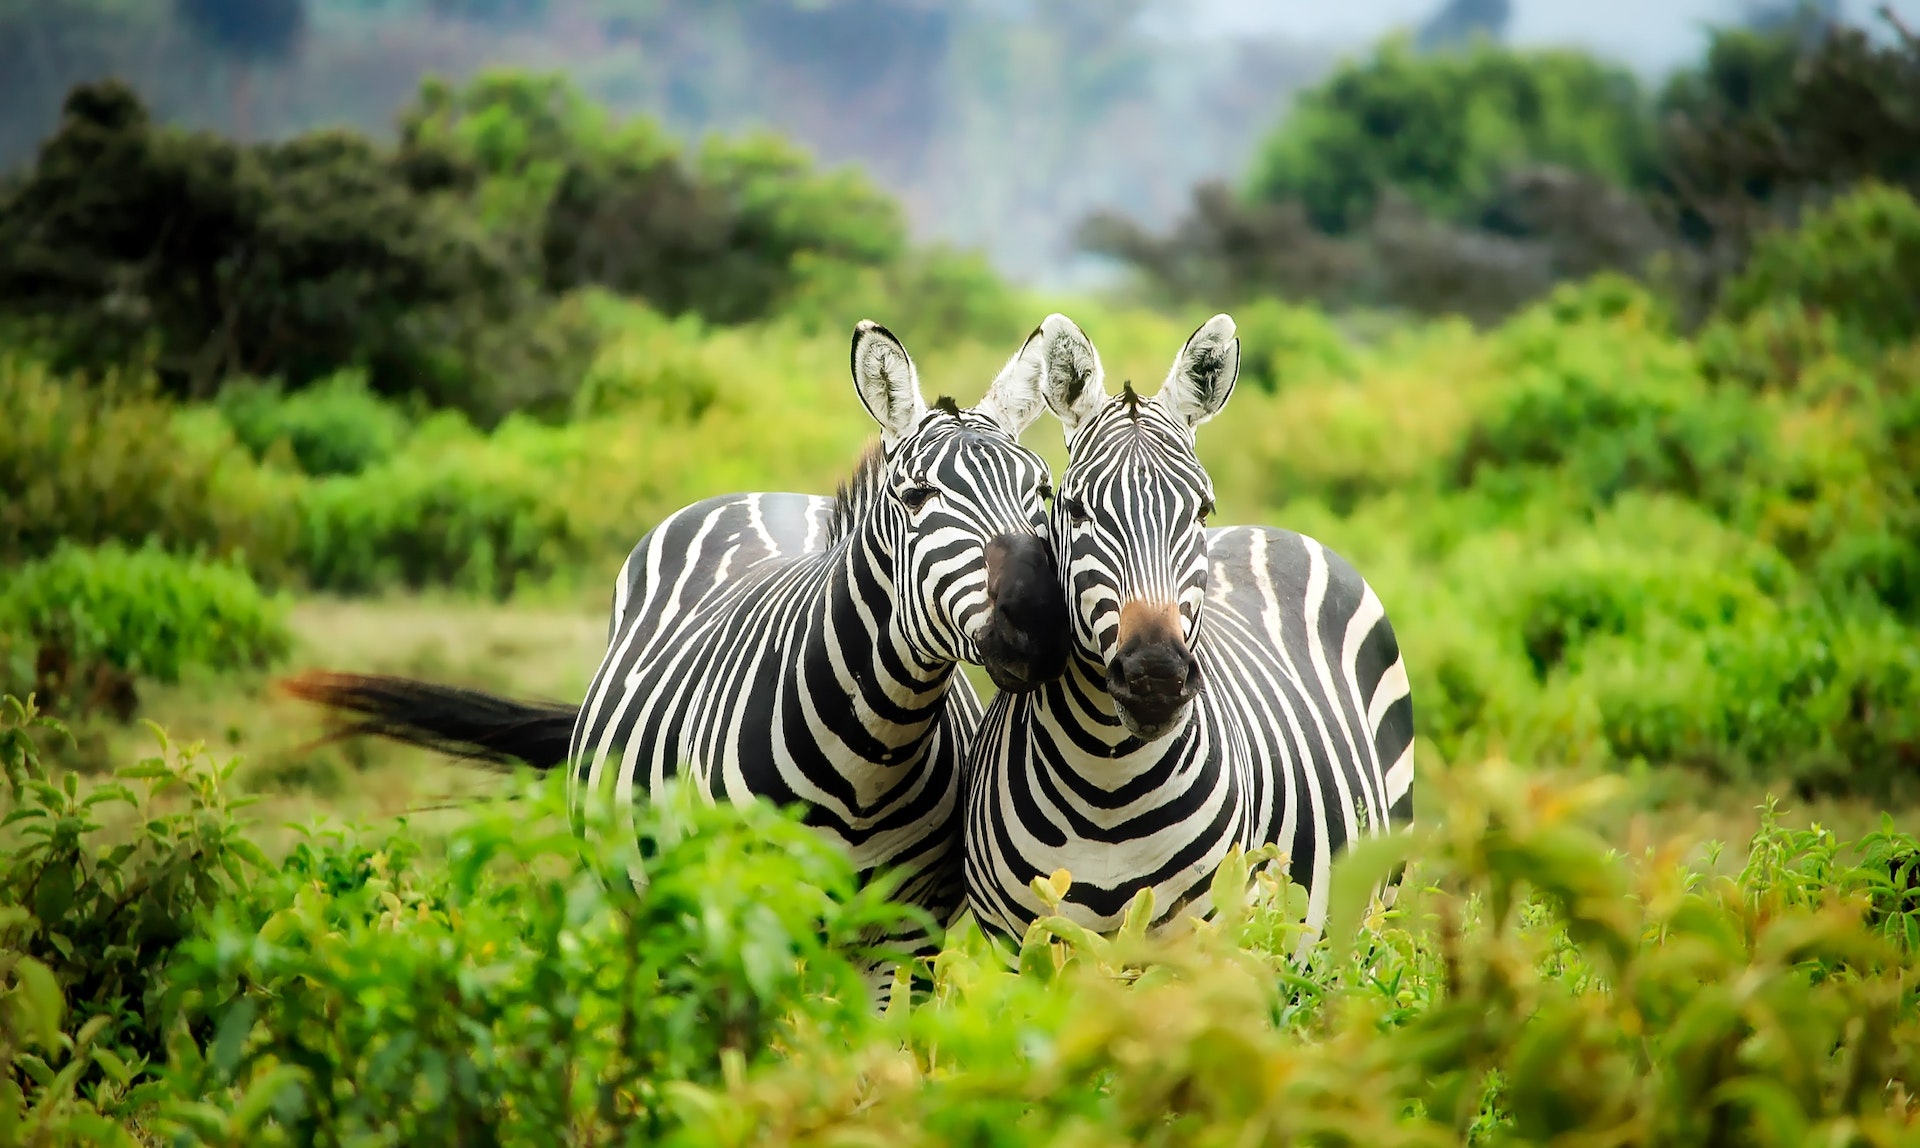 जेब्रा के बारे में 7 दिलचस्प मजेदार तथ्य | Zebras Unveiled: 7 Intriguing Fun Facts About in Hindi